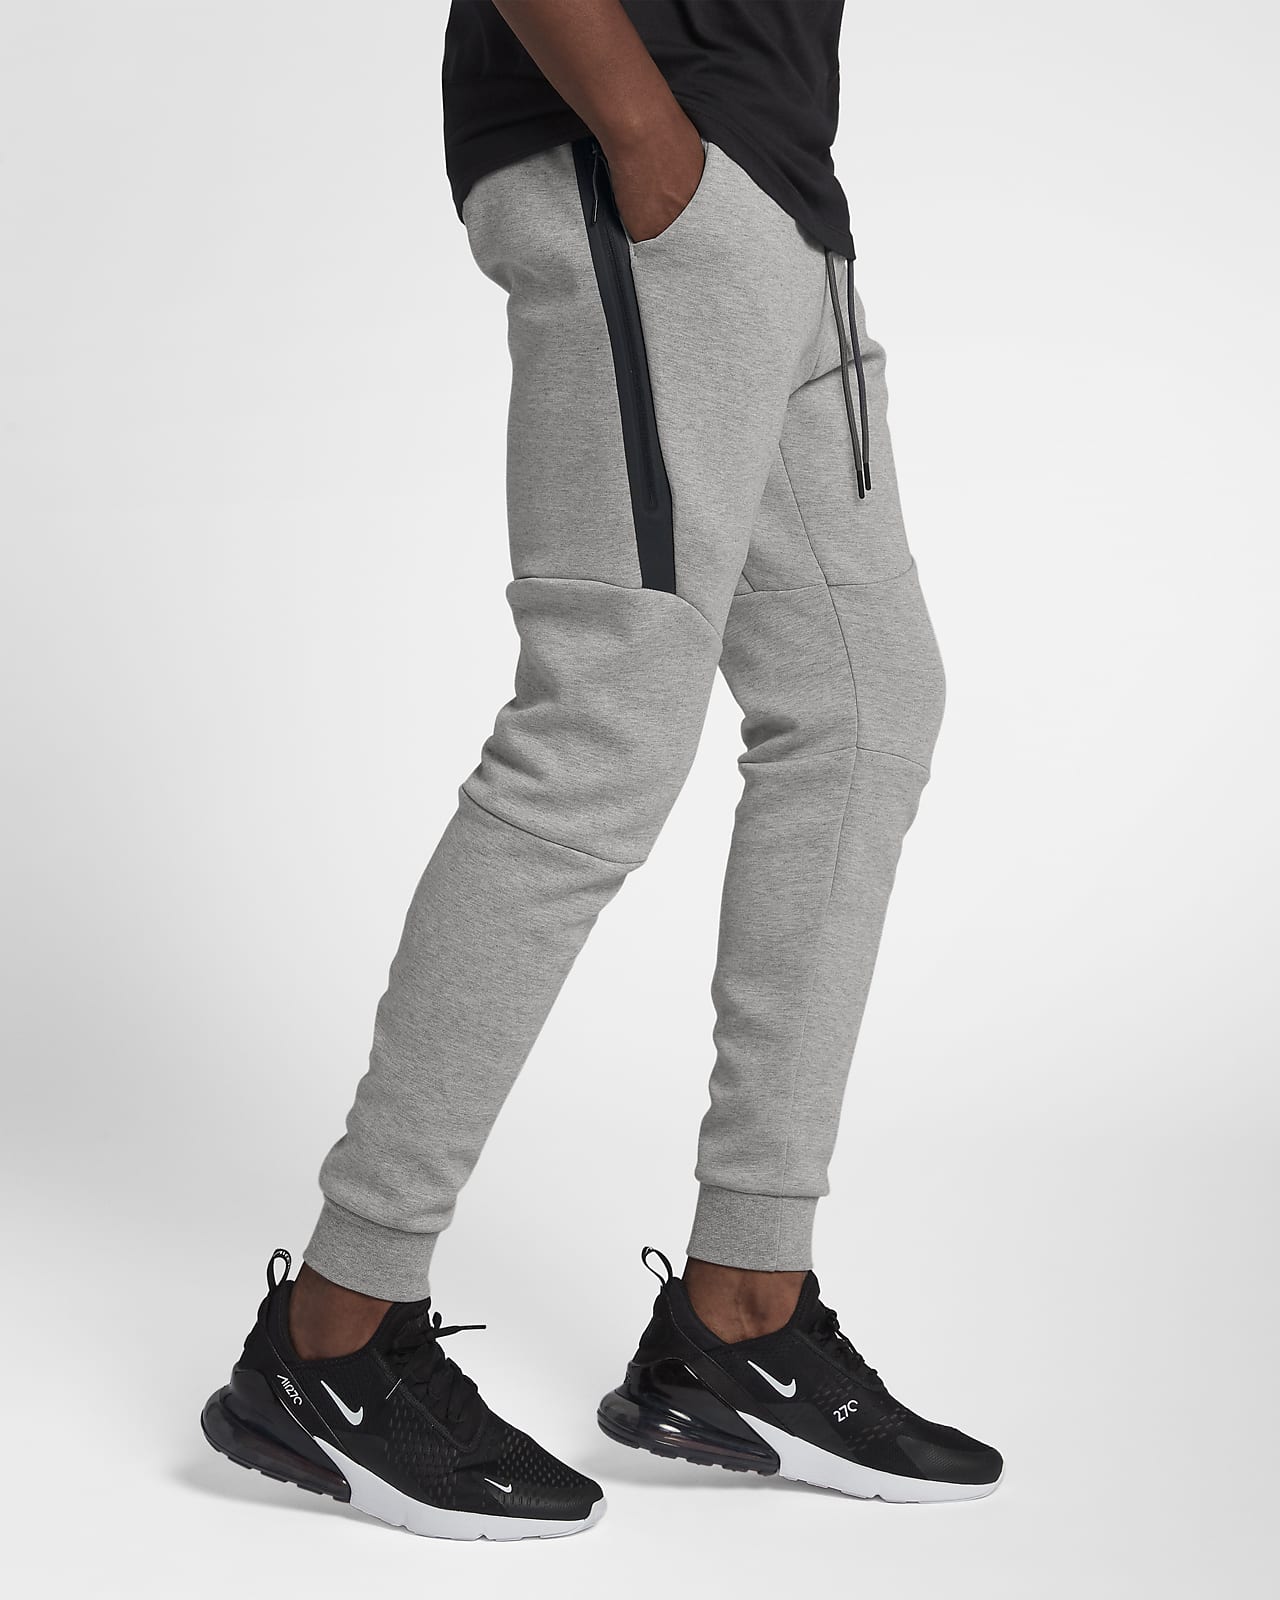 Nike Sportswear Tech Fleece Pants Joggers Black Mens Size 2XL [805162-010]